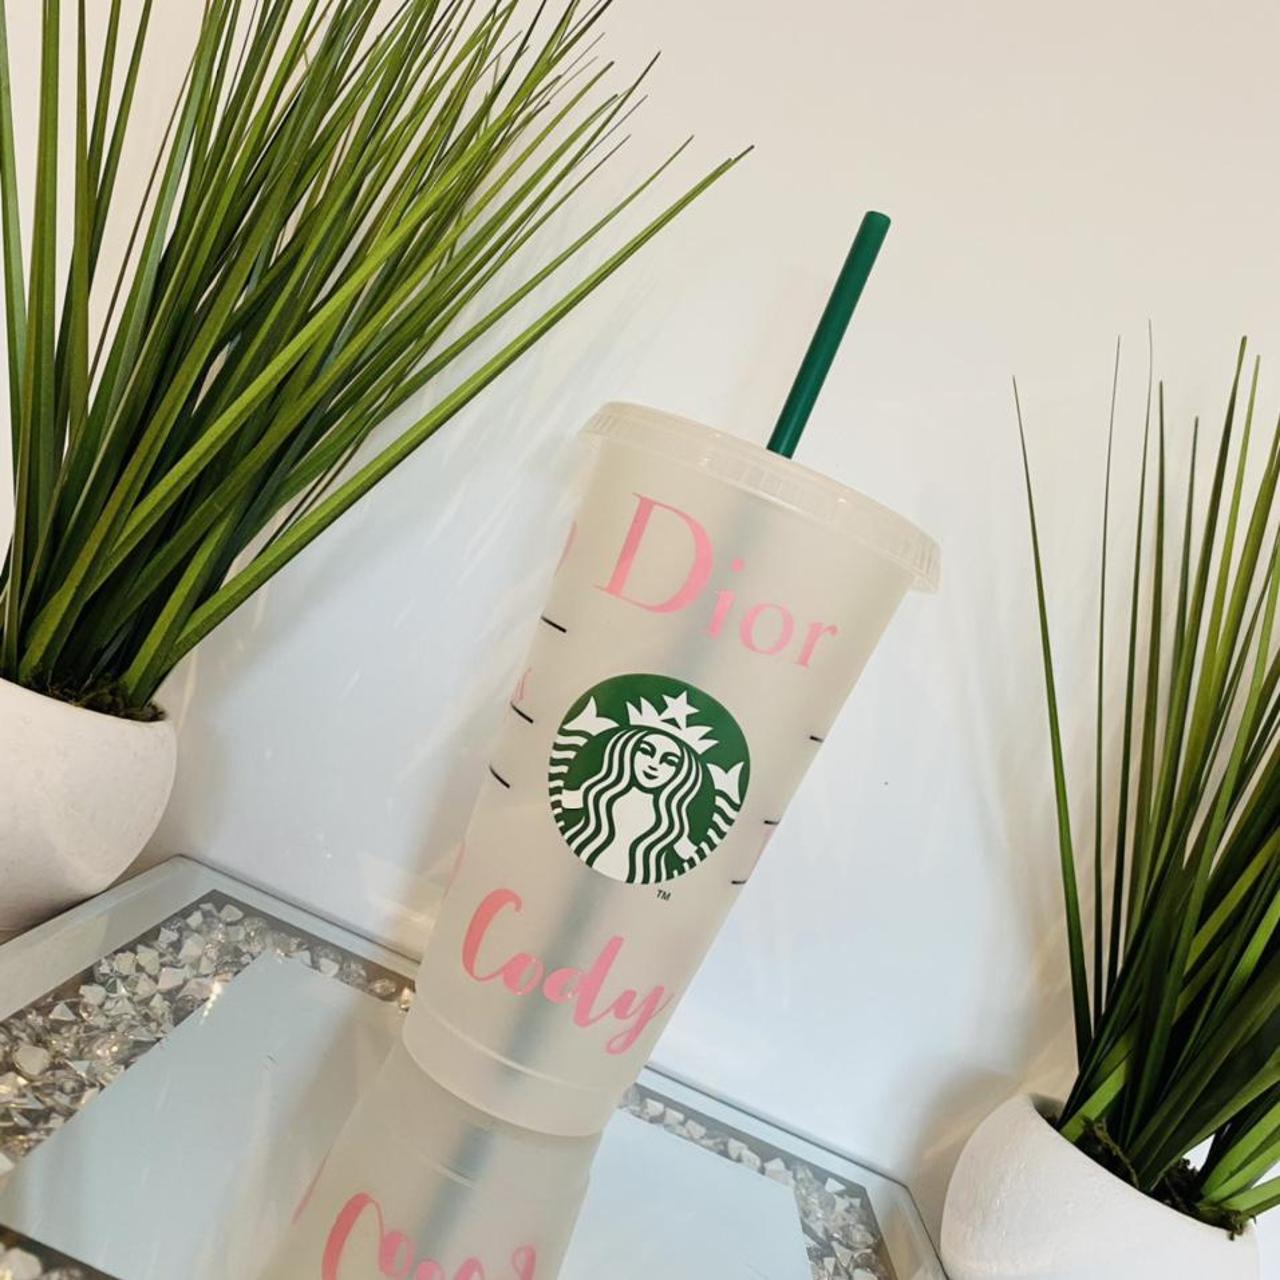 Chanel Starbucks Cup 